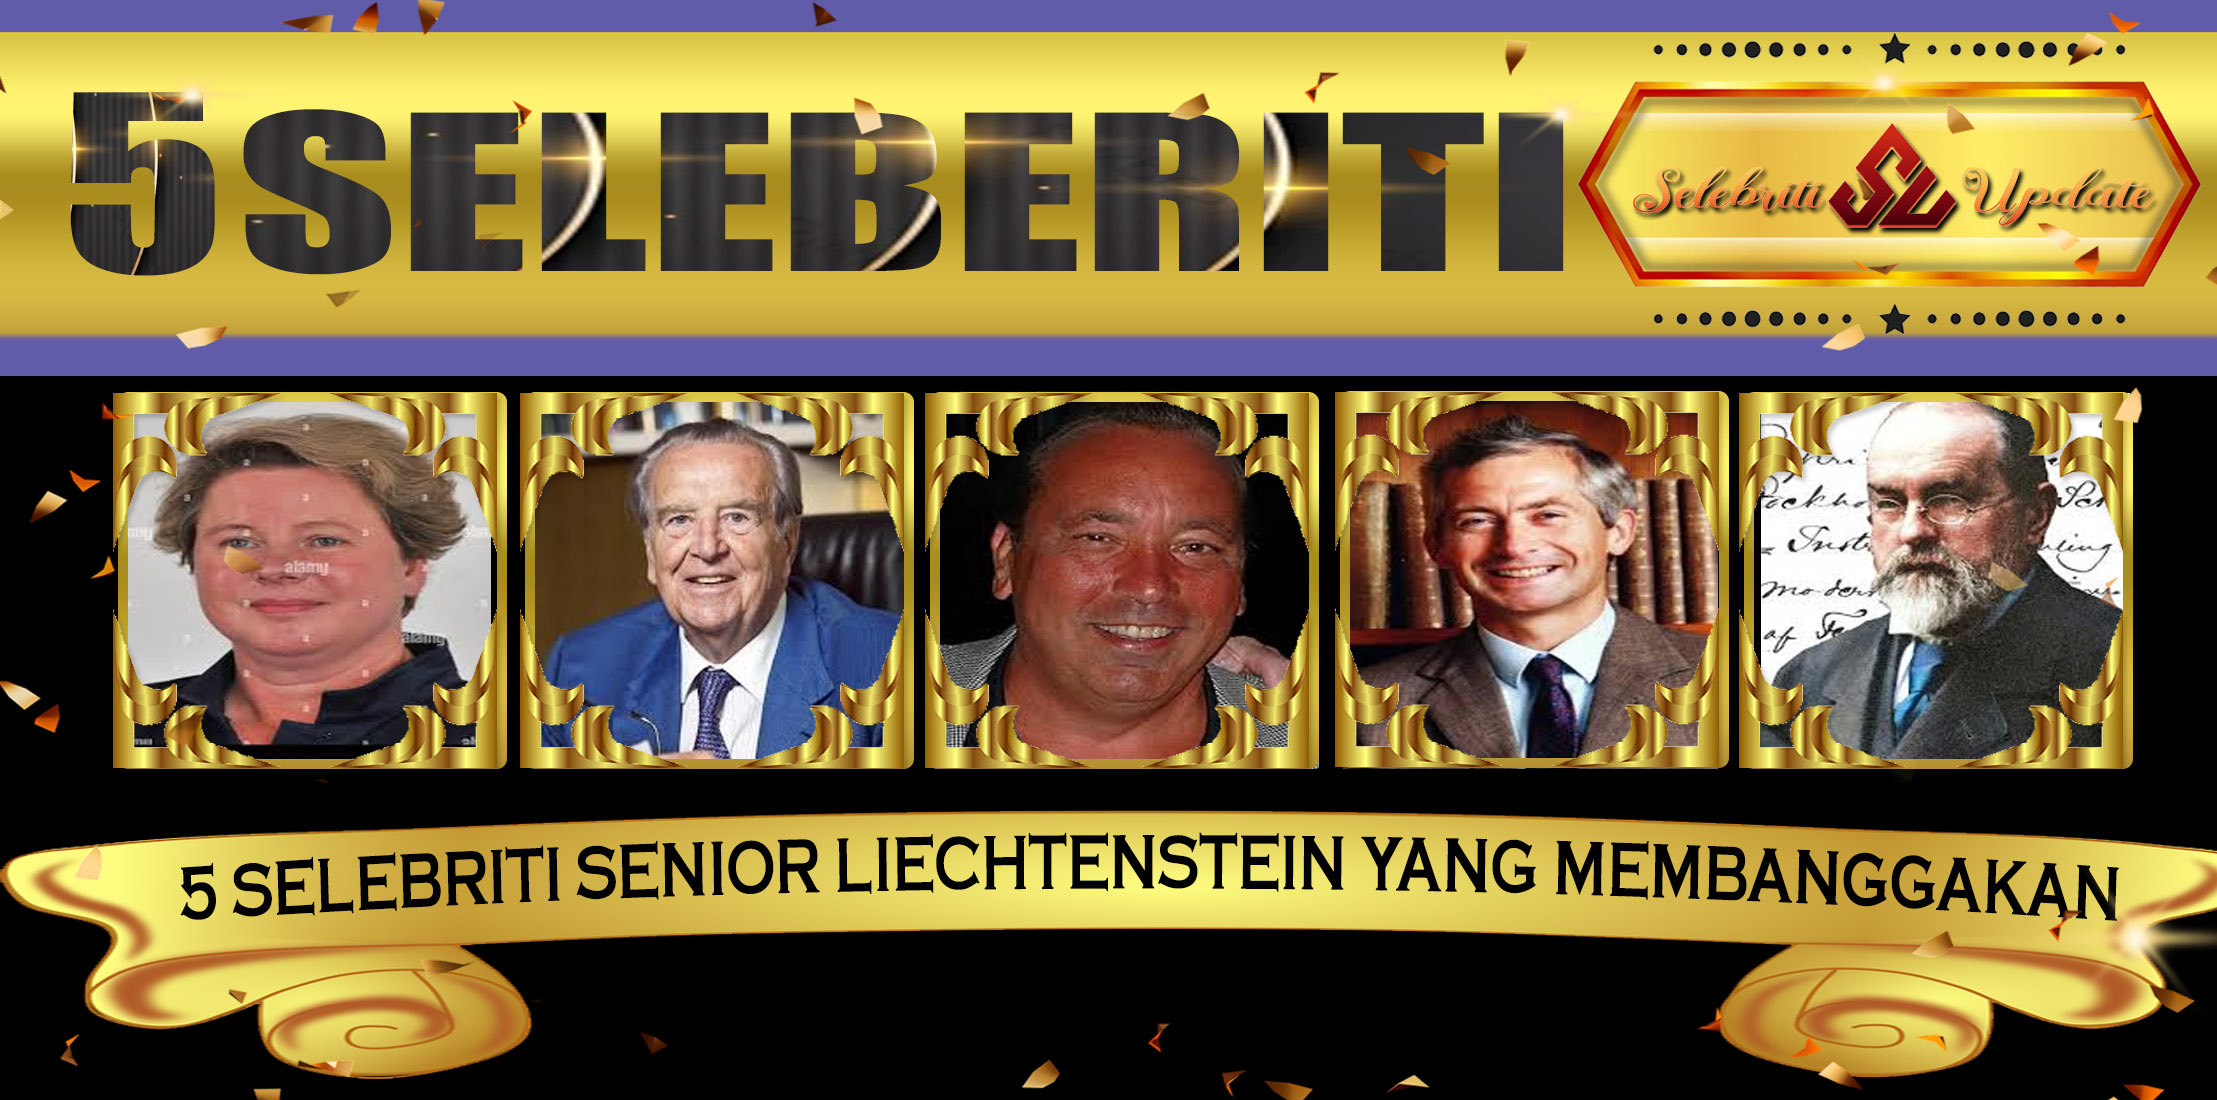 5 Selebriti Senior Liechtenstein yang Membanggakan